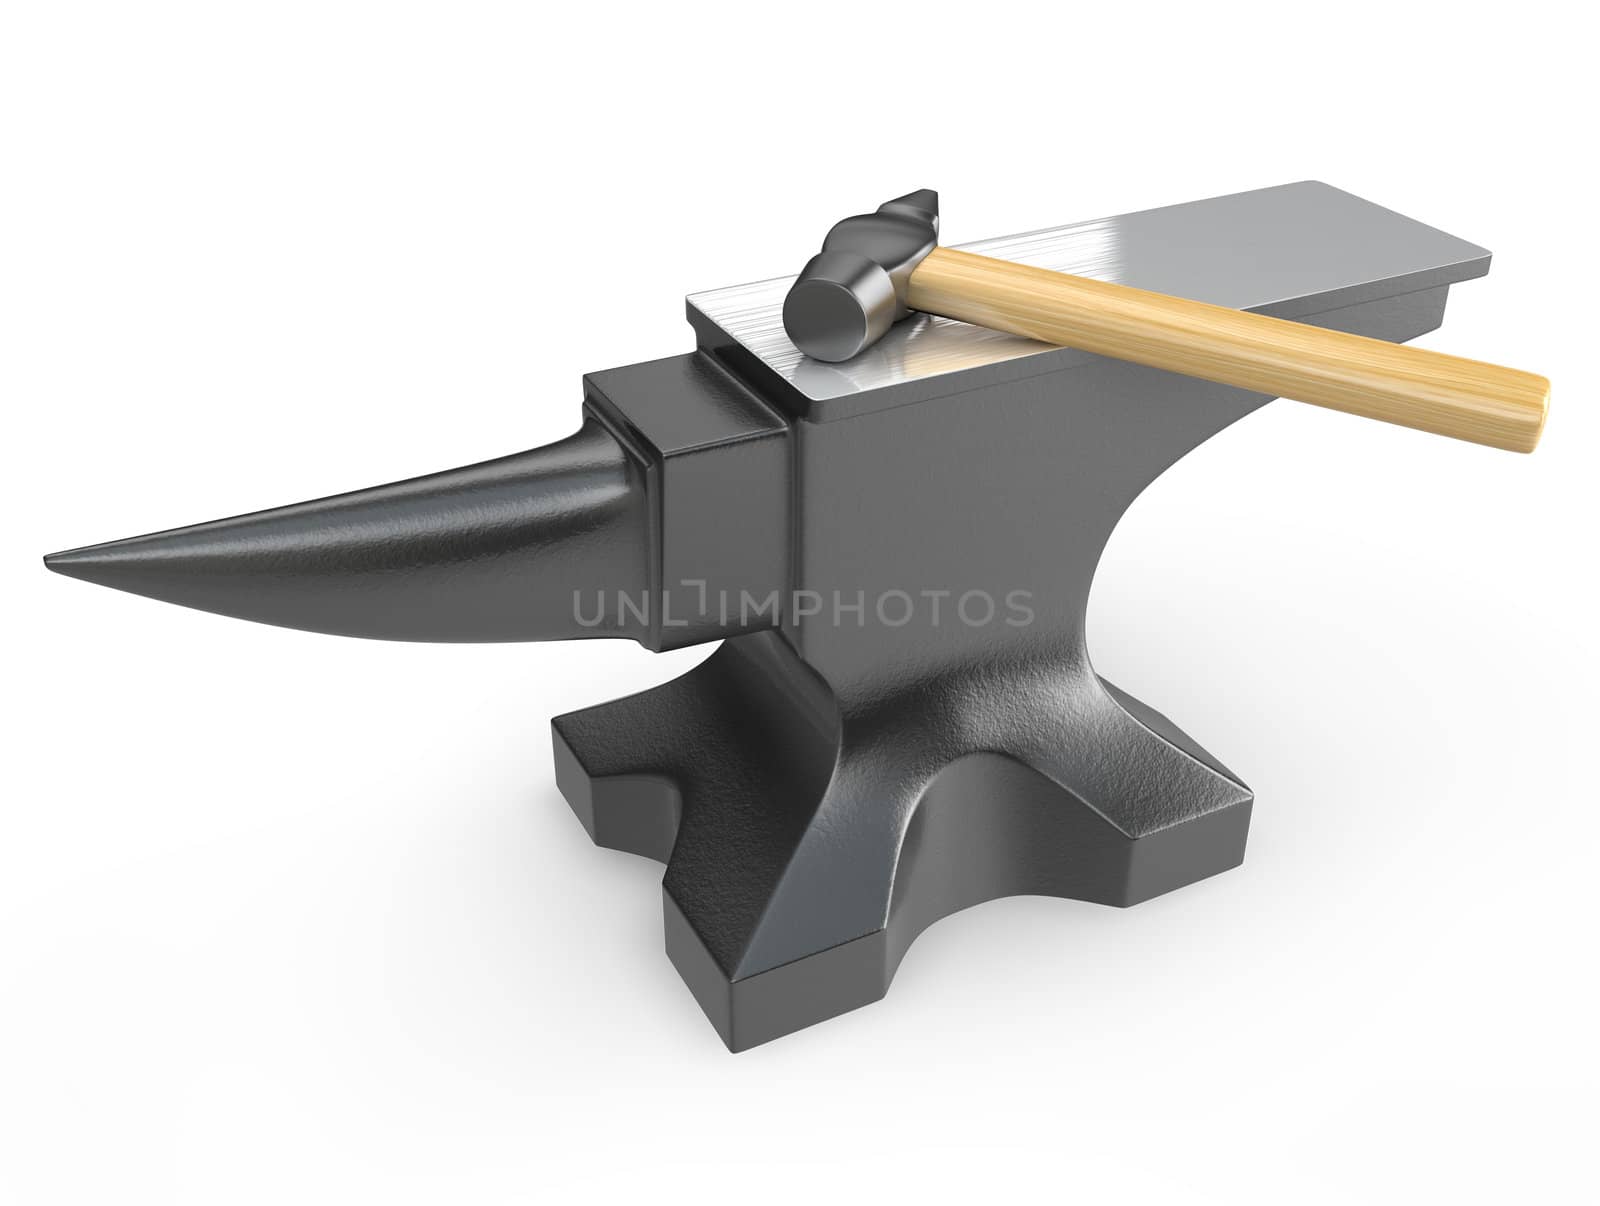 Hammer on a metal anvil by Zelfit